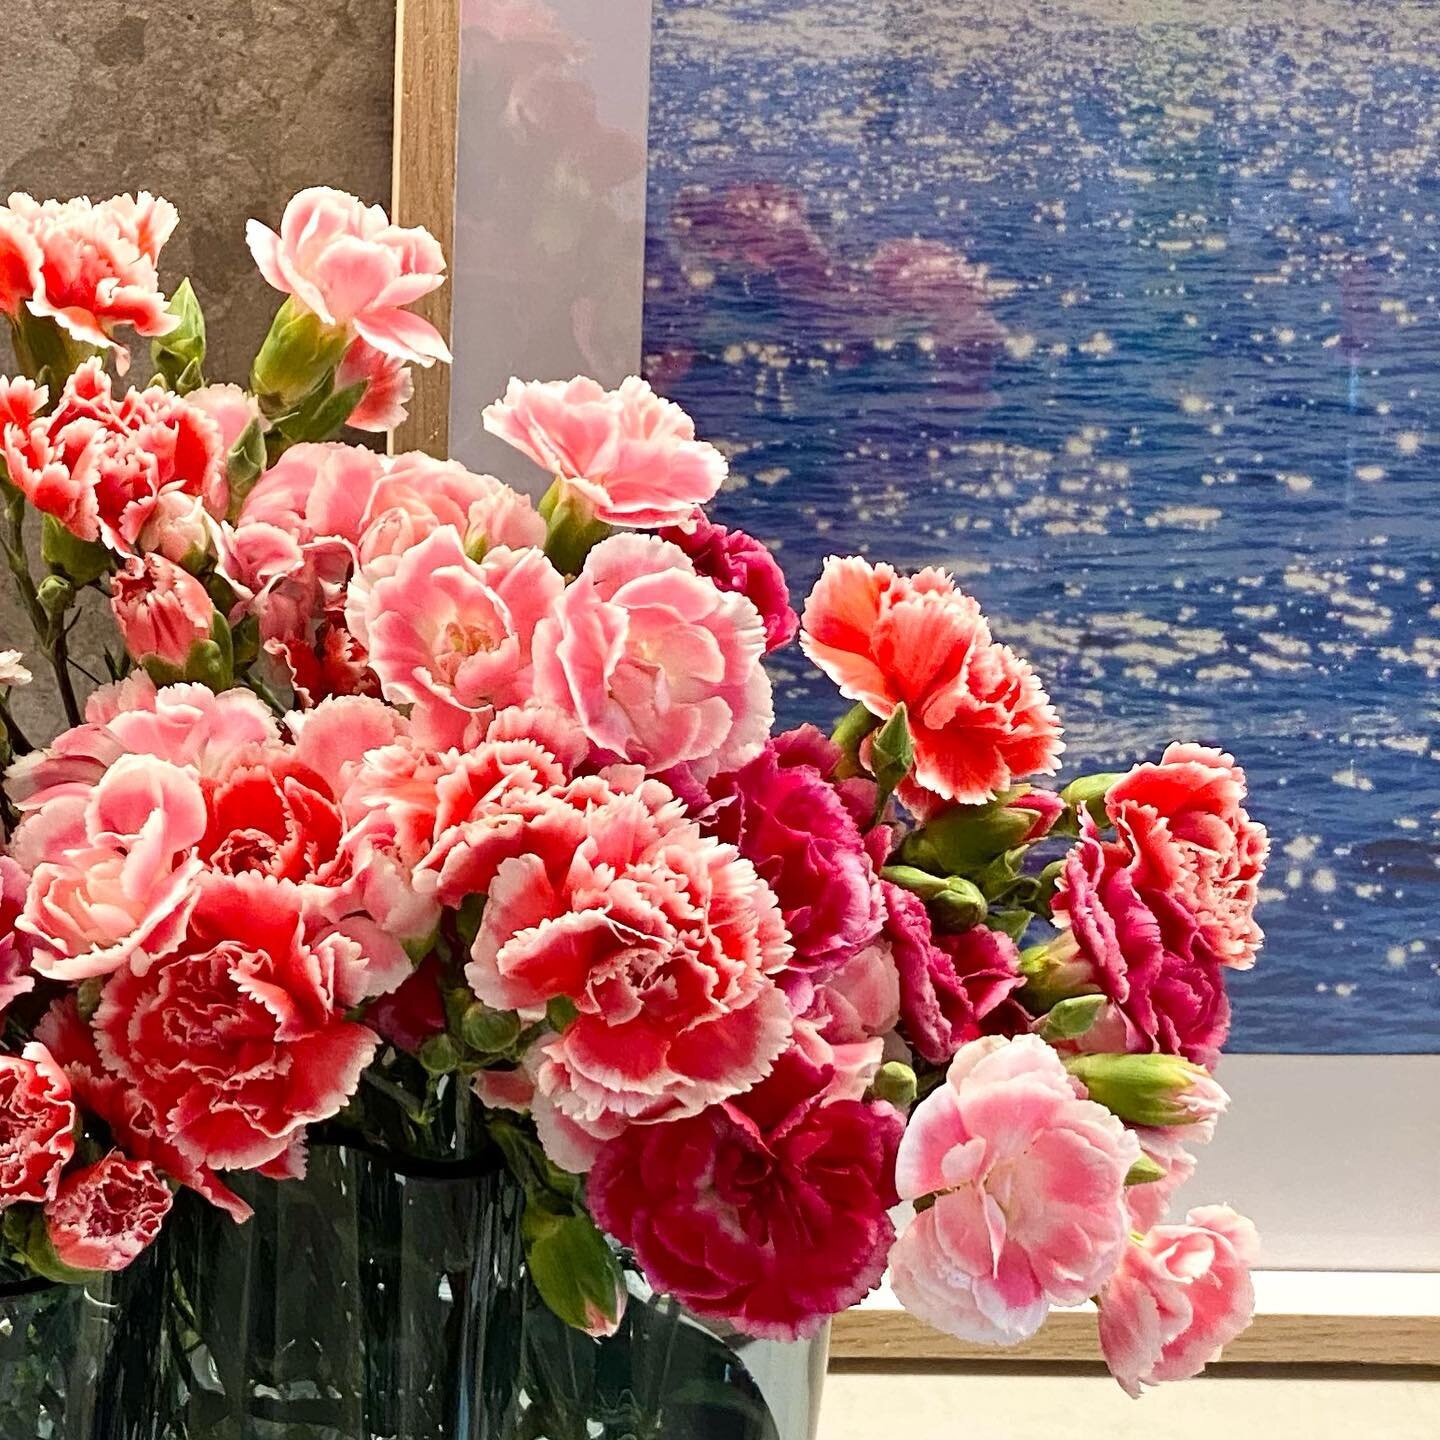 #carnations #pinkandred #pinkflowers #stilllife #interiorstyling #summervibes #propstyling